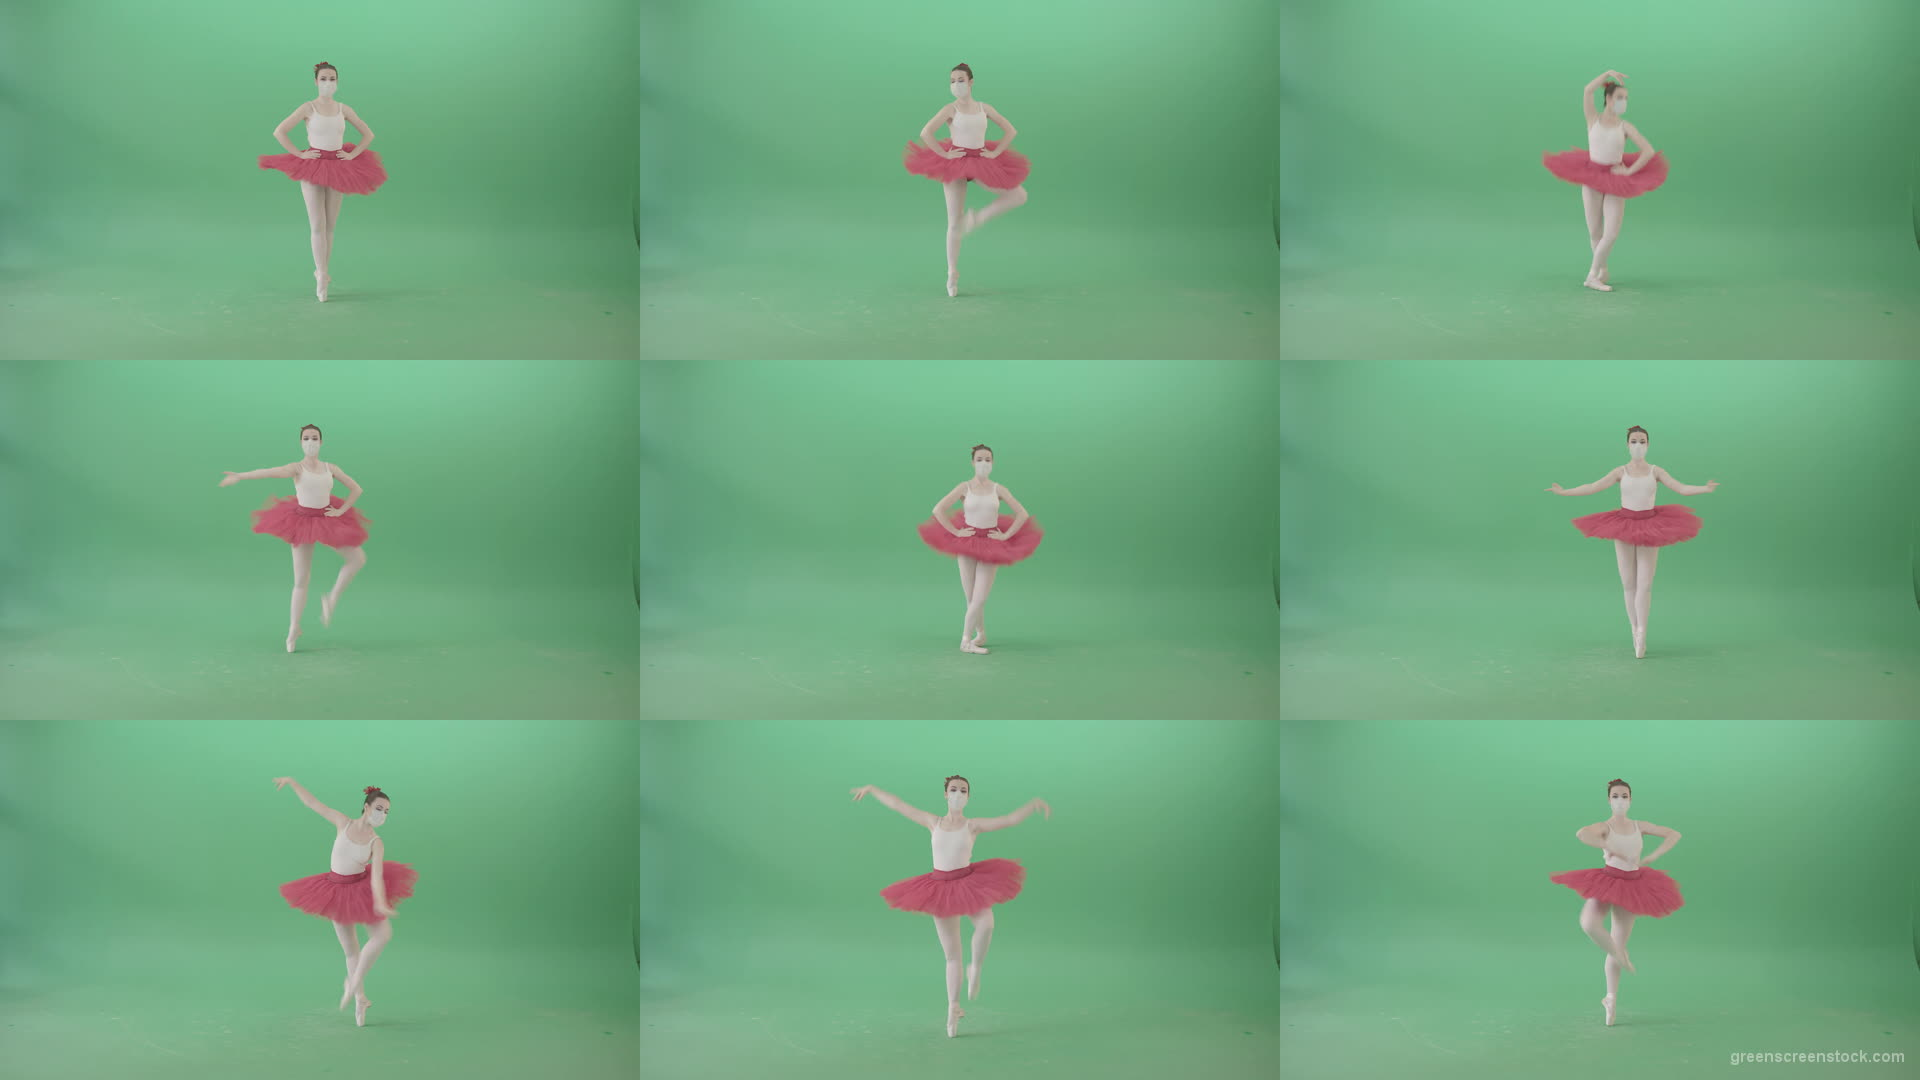 Ballet-Girl-in-Corona-Virus-Mask-Jumping-like-ballerina-isolated-on-green-screen-4K-Video-Footage-1920 Green Screen Stock